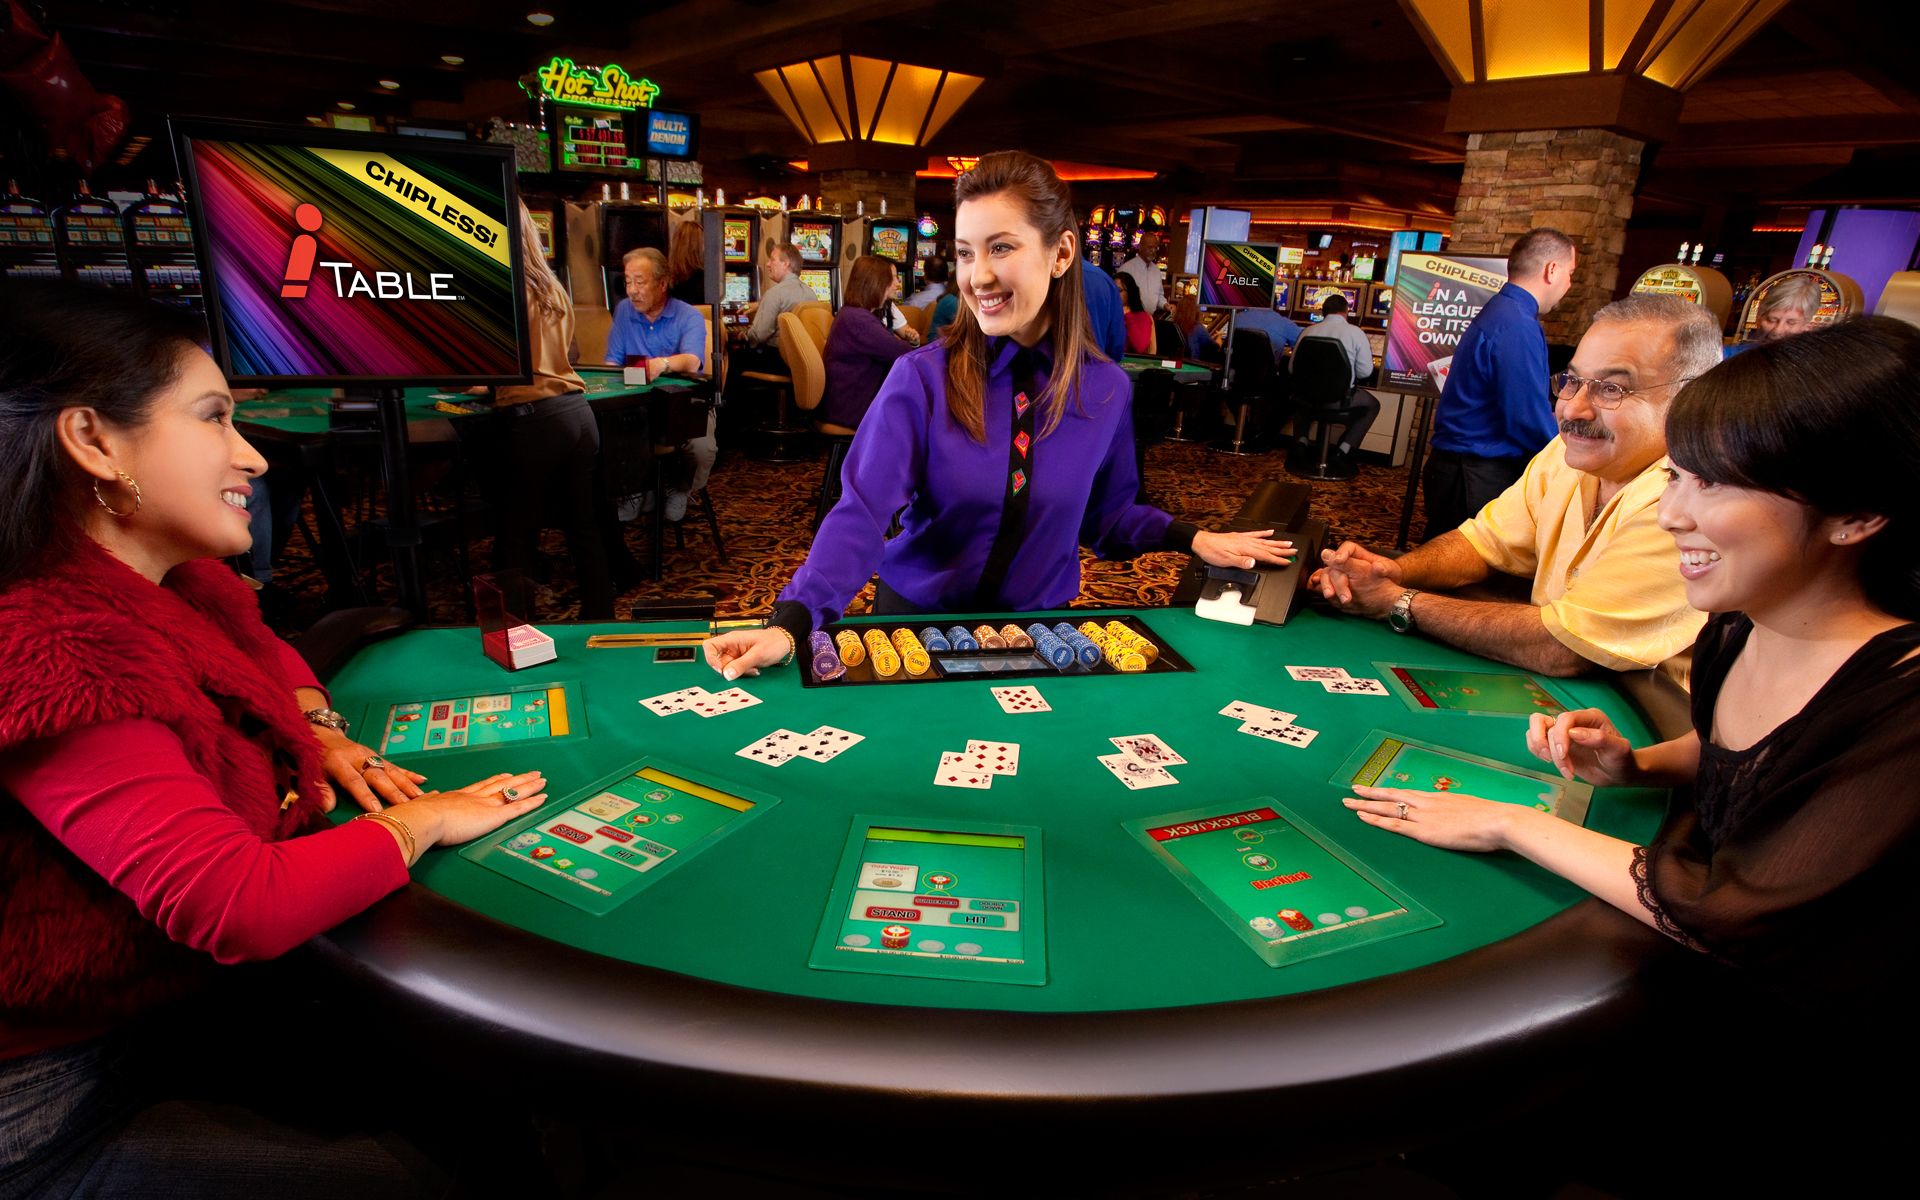 statutes address online casino gambling or internet poker